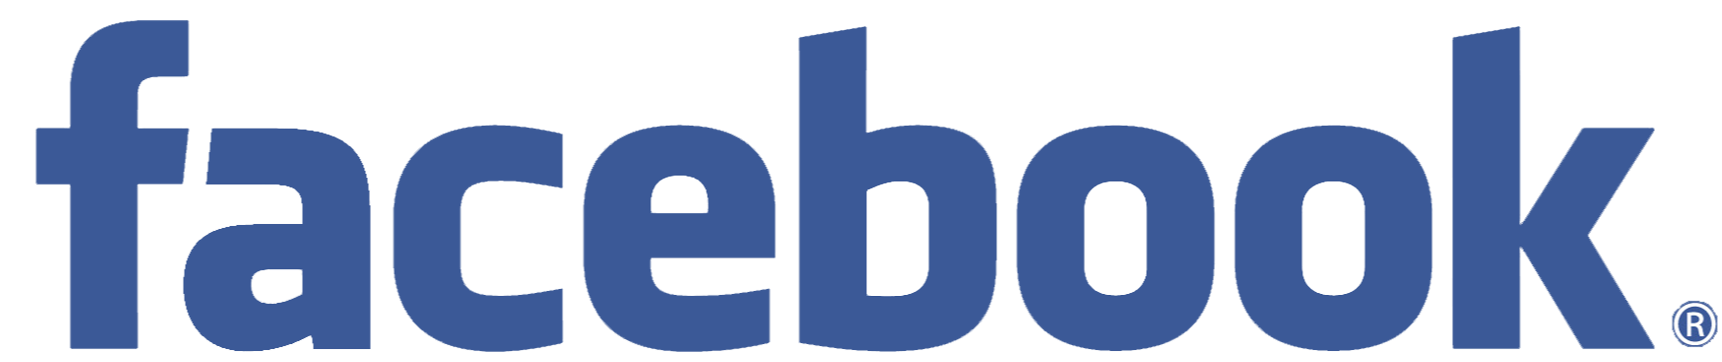 Facebook Logo Clipart PNG Image